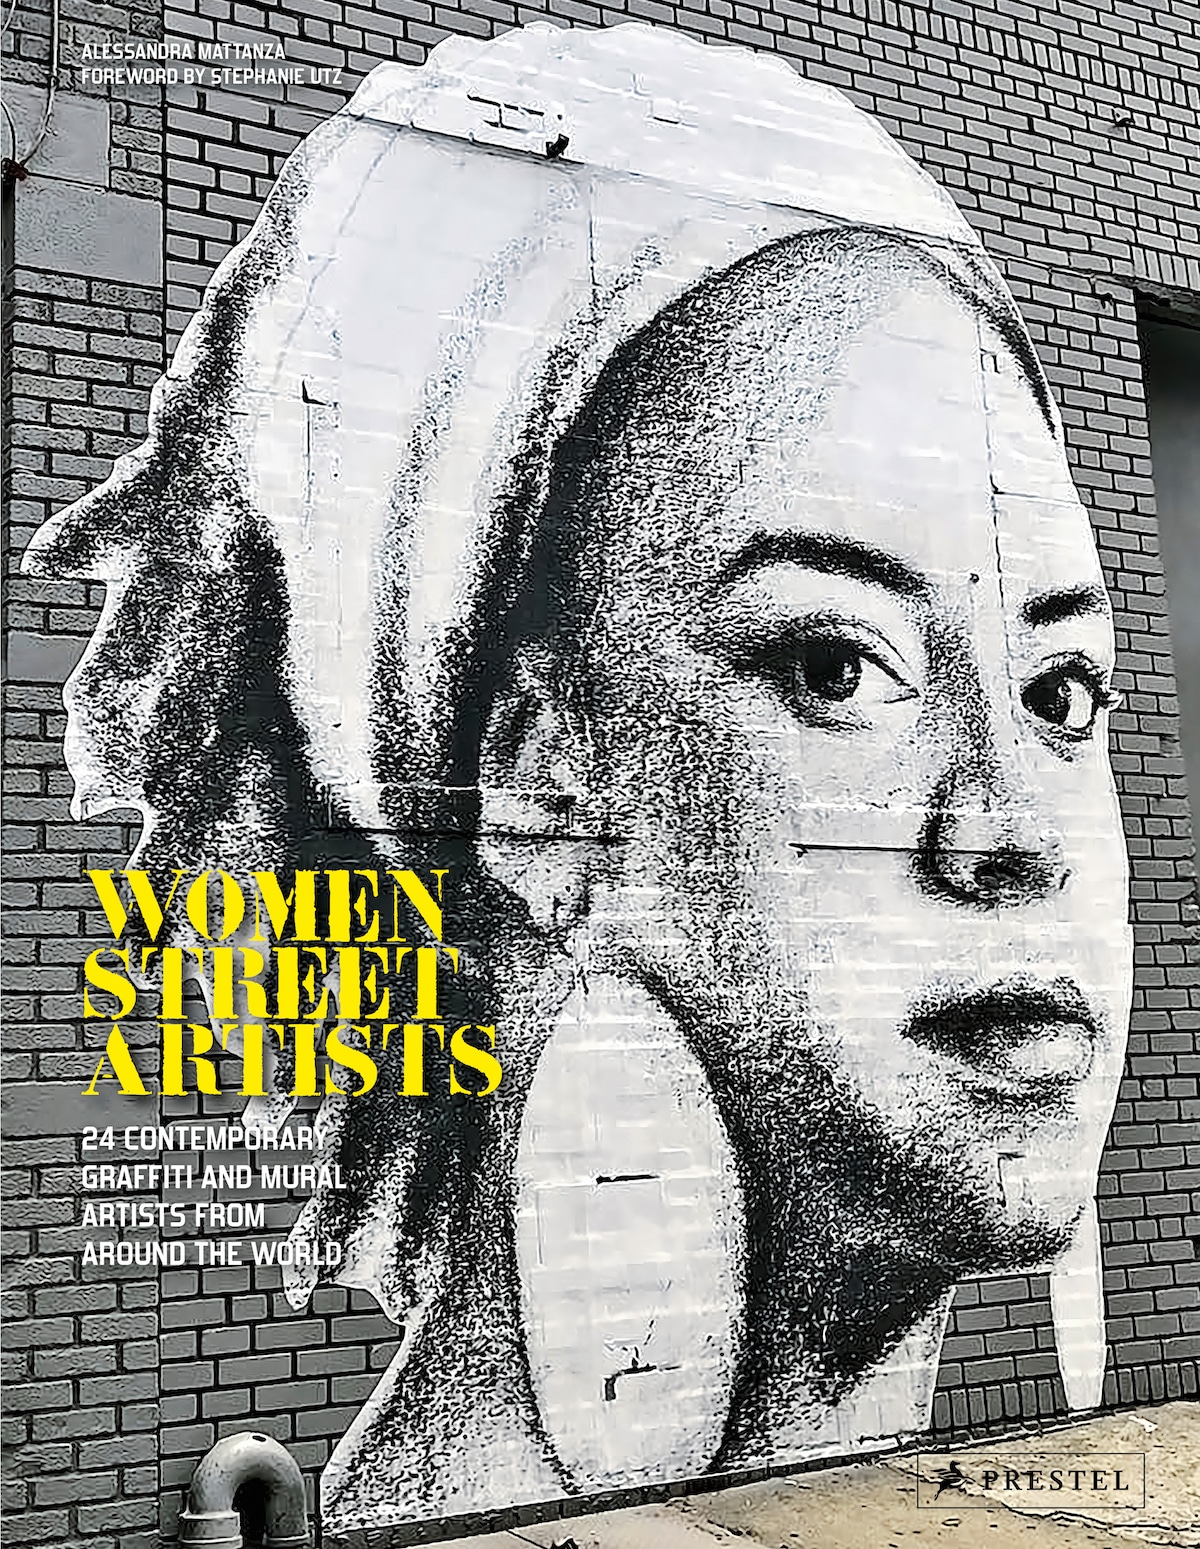 Women Street Artists by Alessandra Mattanza